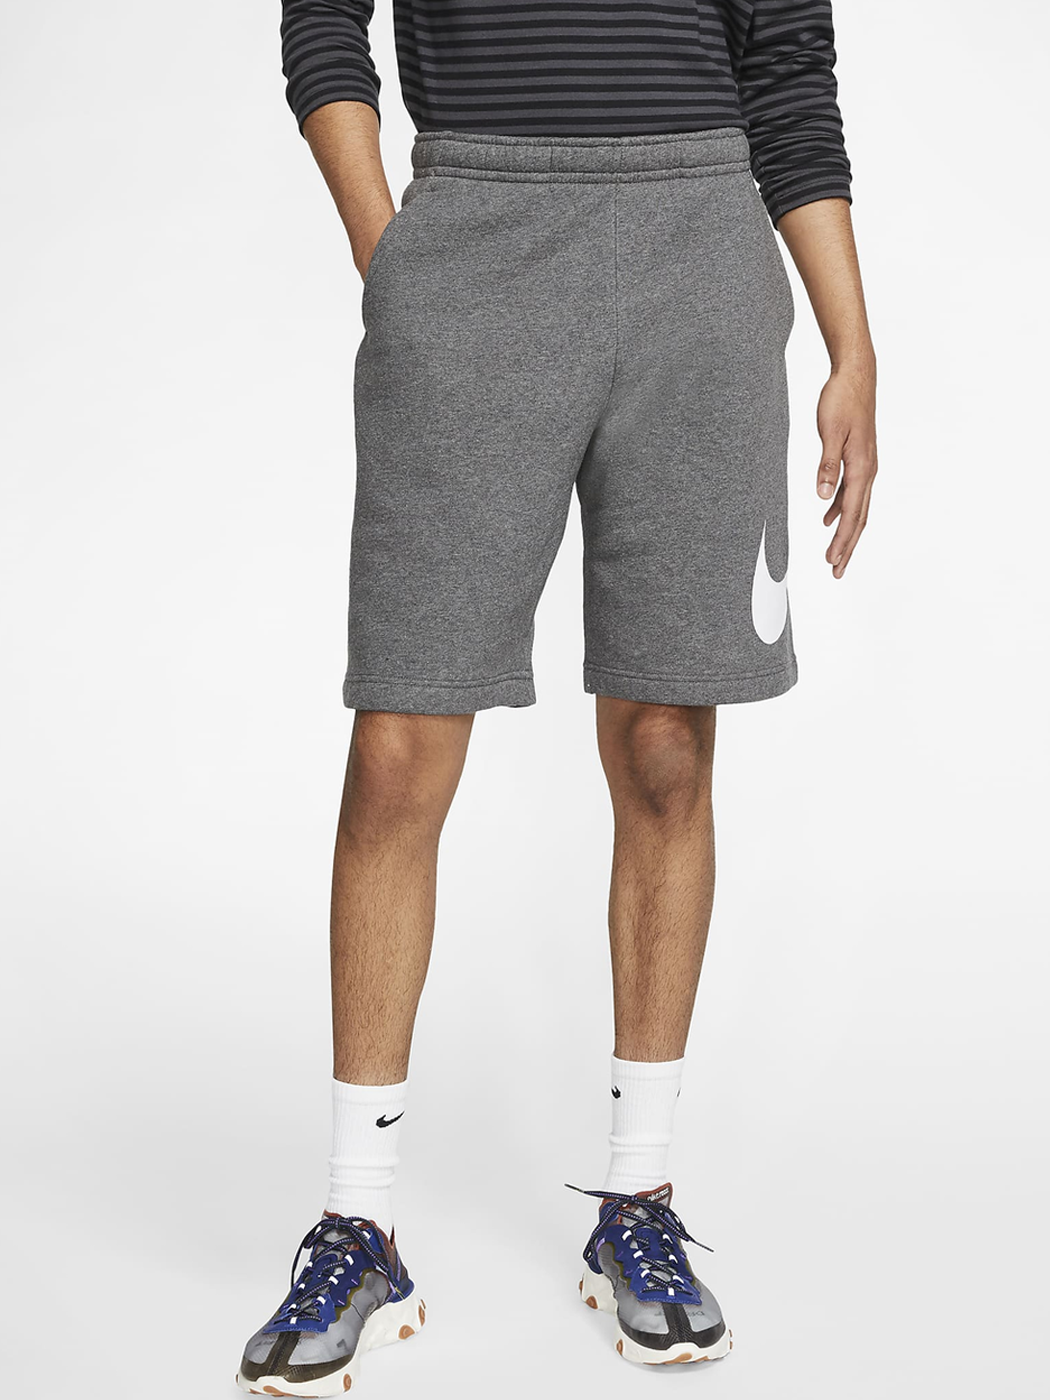 Nike Sweatpants Basketball Jogging Shorts Dark Gray